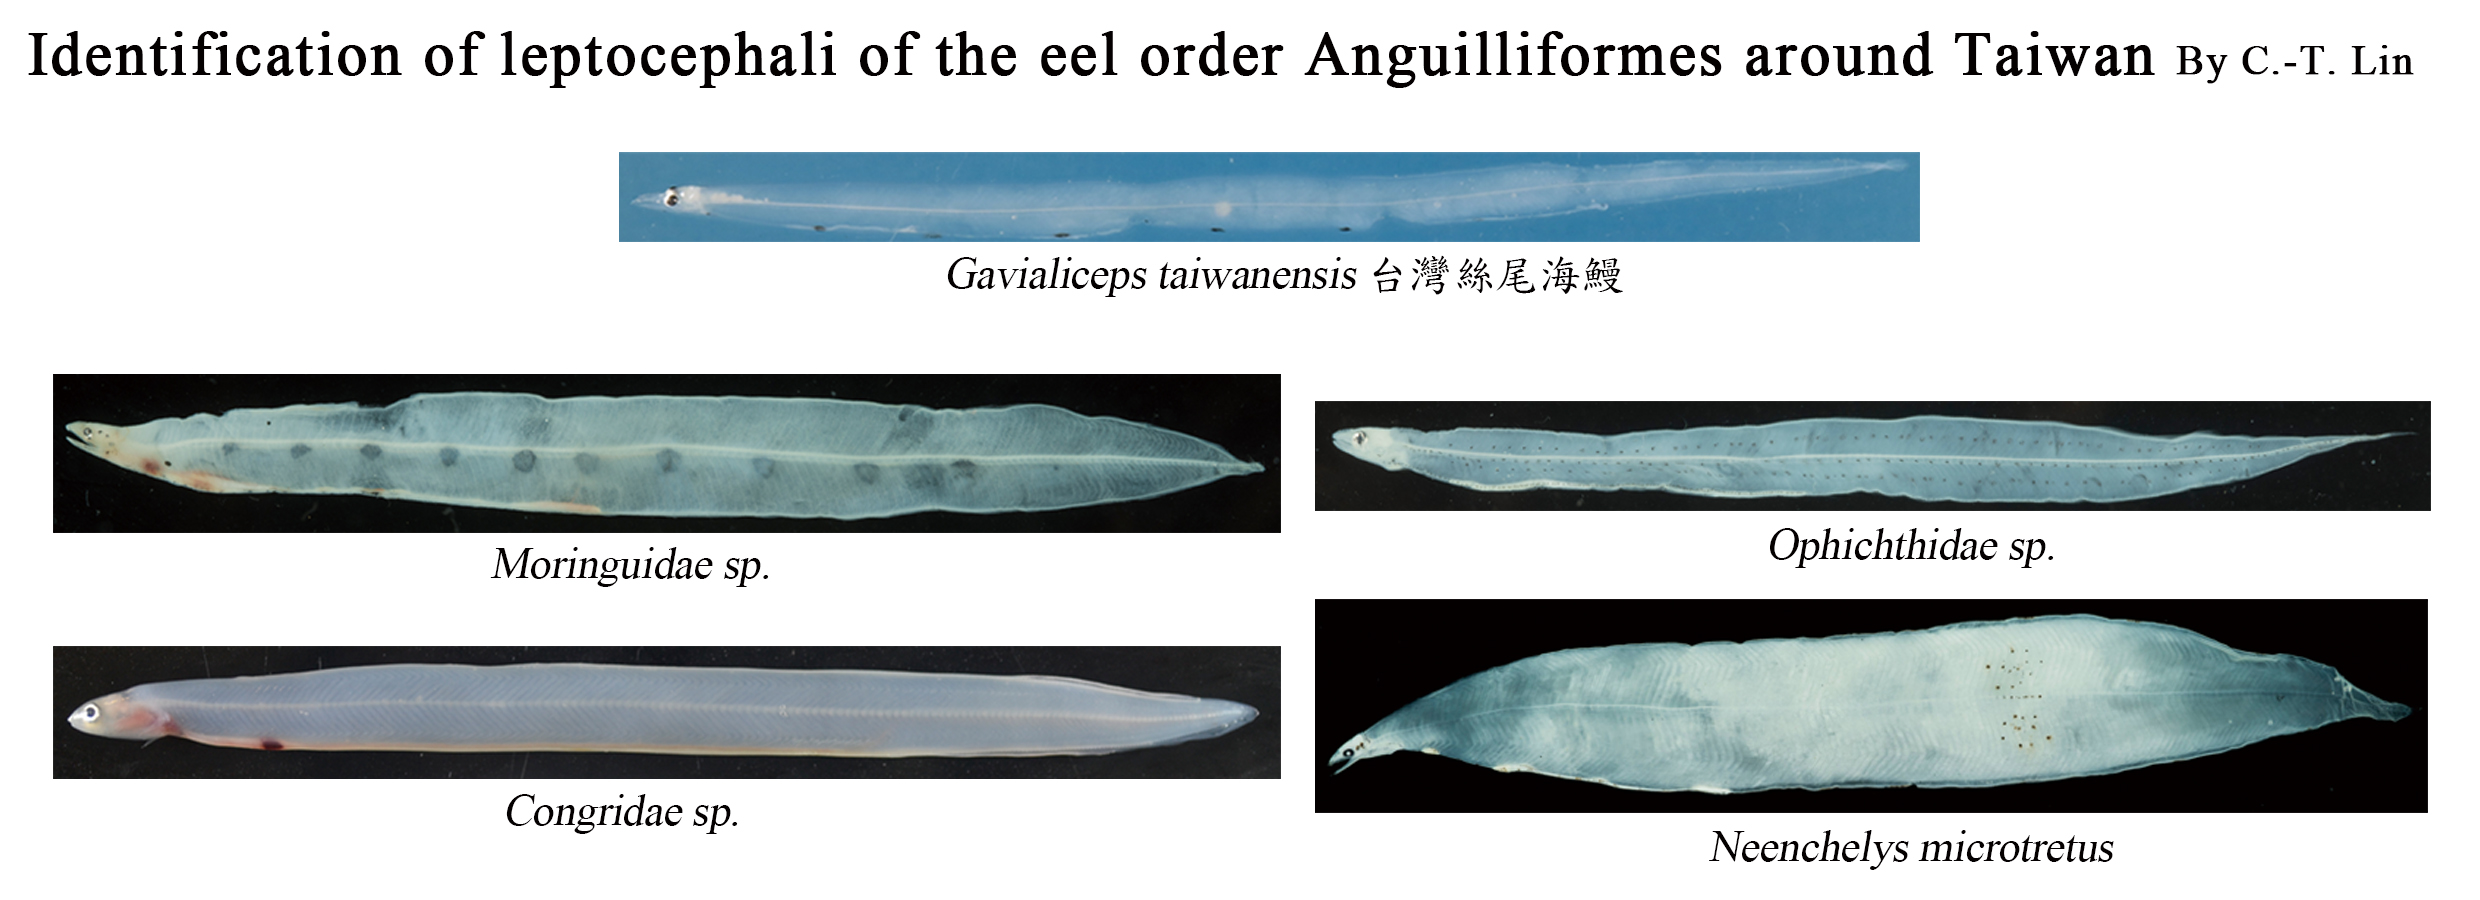 Identification of leptocephali of the eel order Anguilliformes around Taiwan